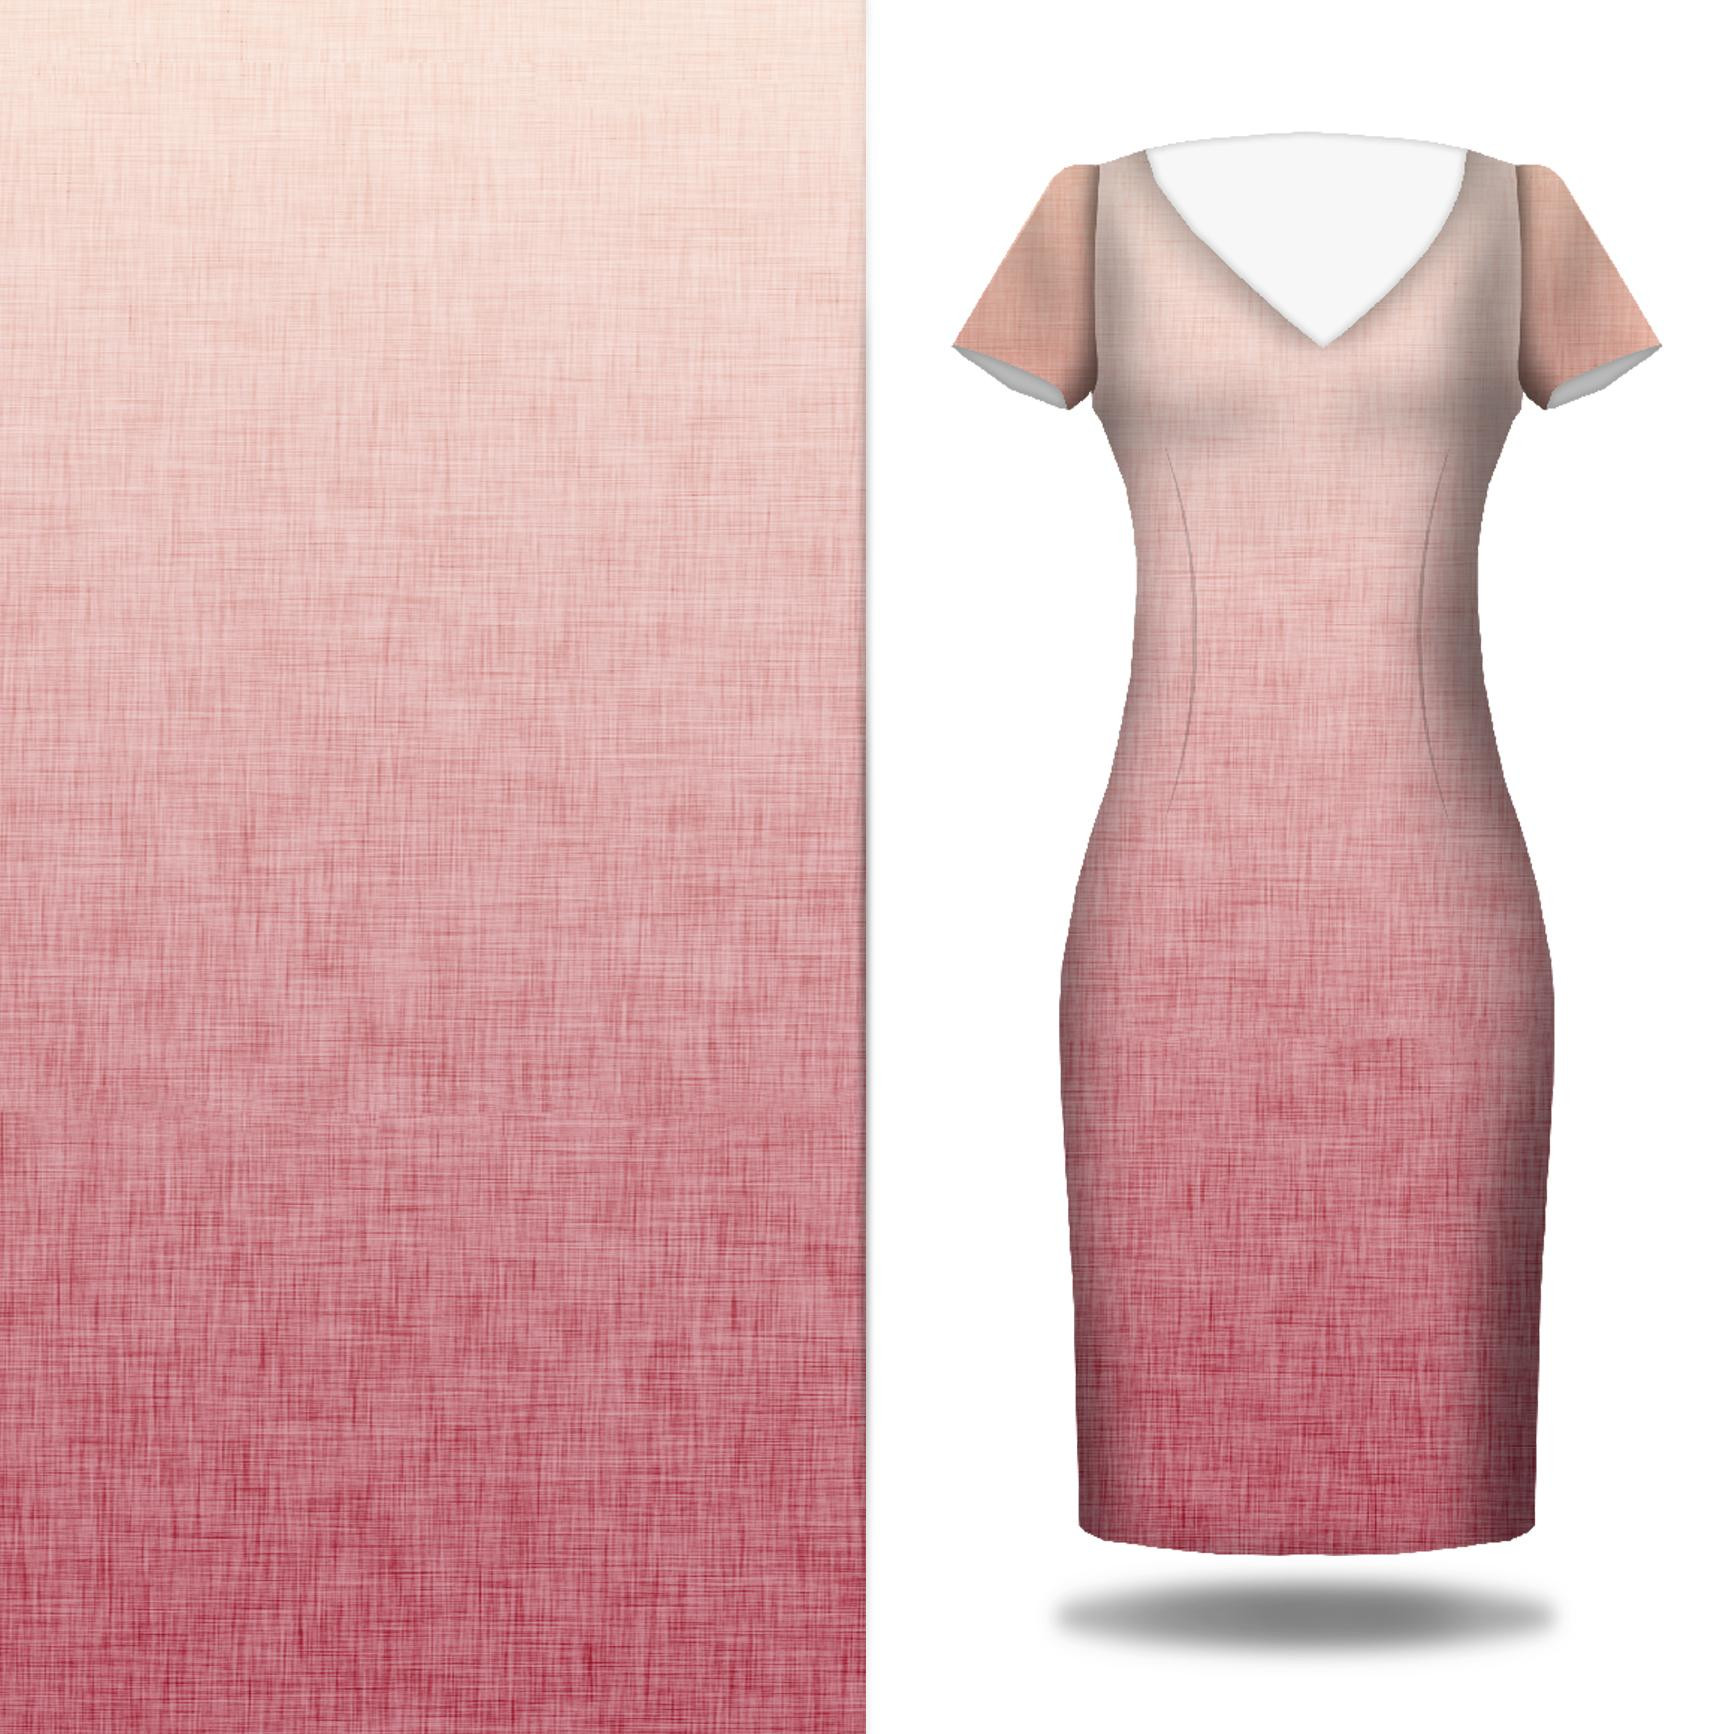 OMBRE / ACID WASH - fuksja (blady róż) - panel sukienkowy krepa